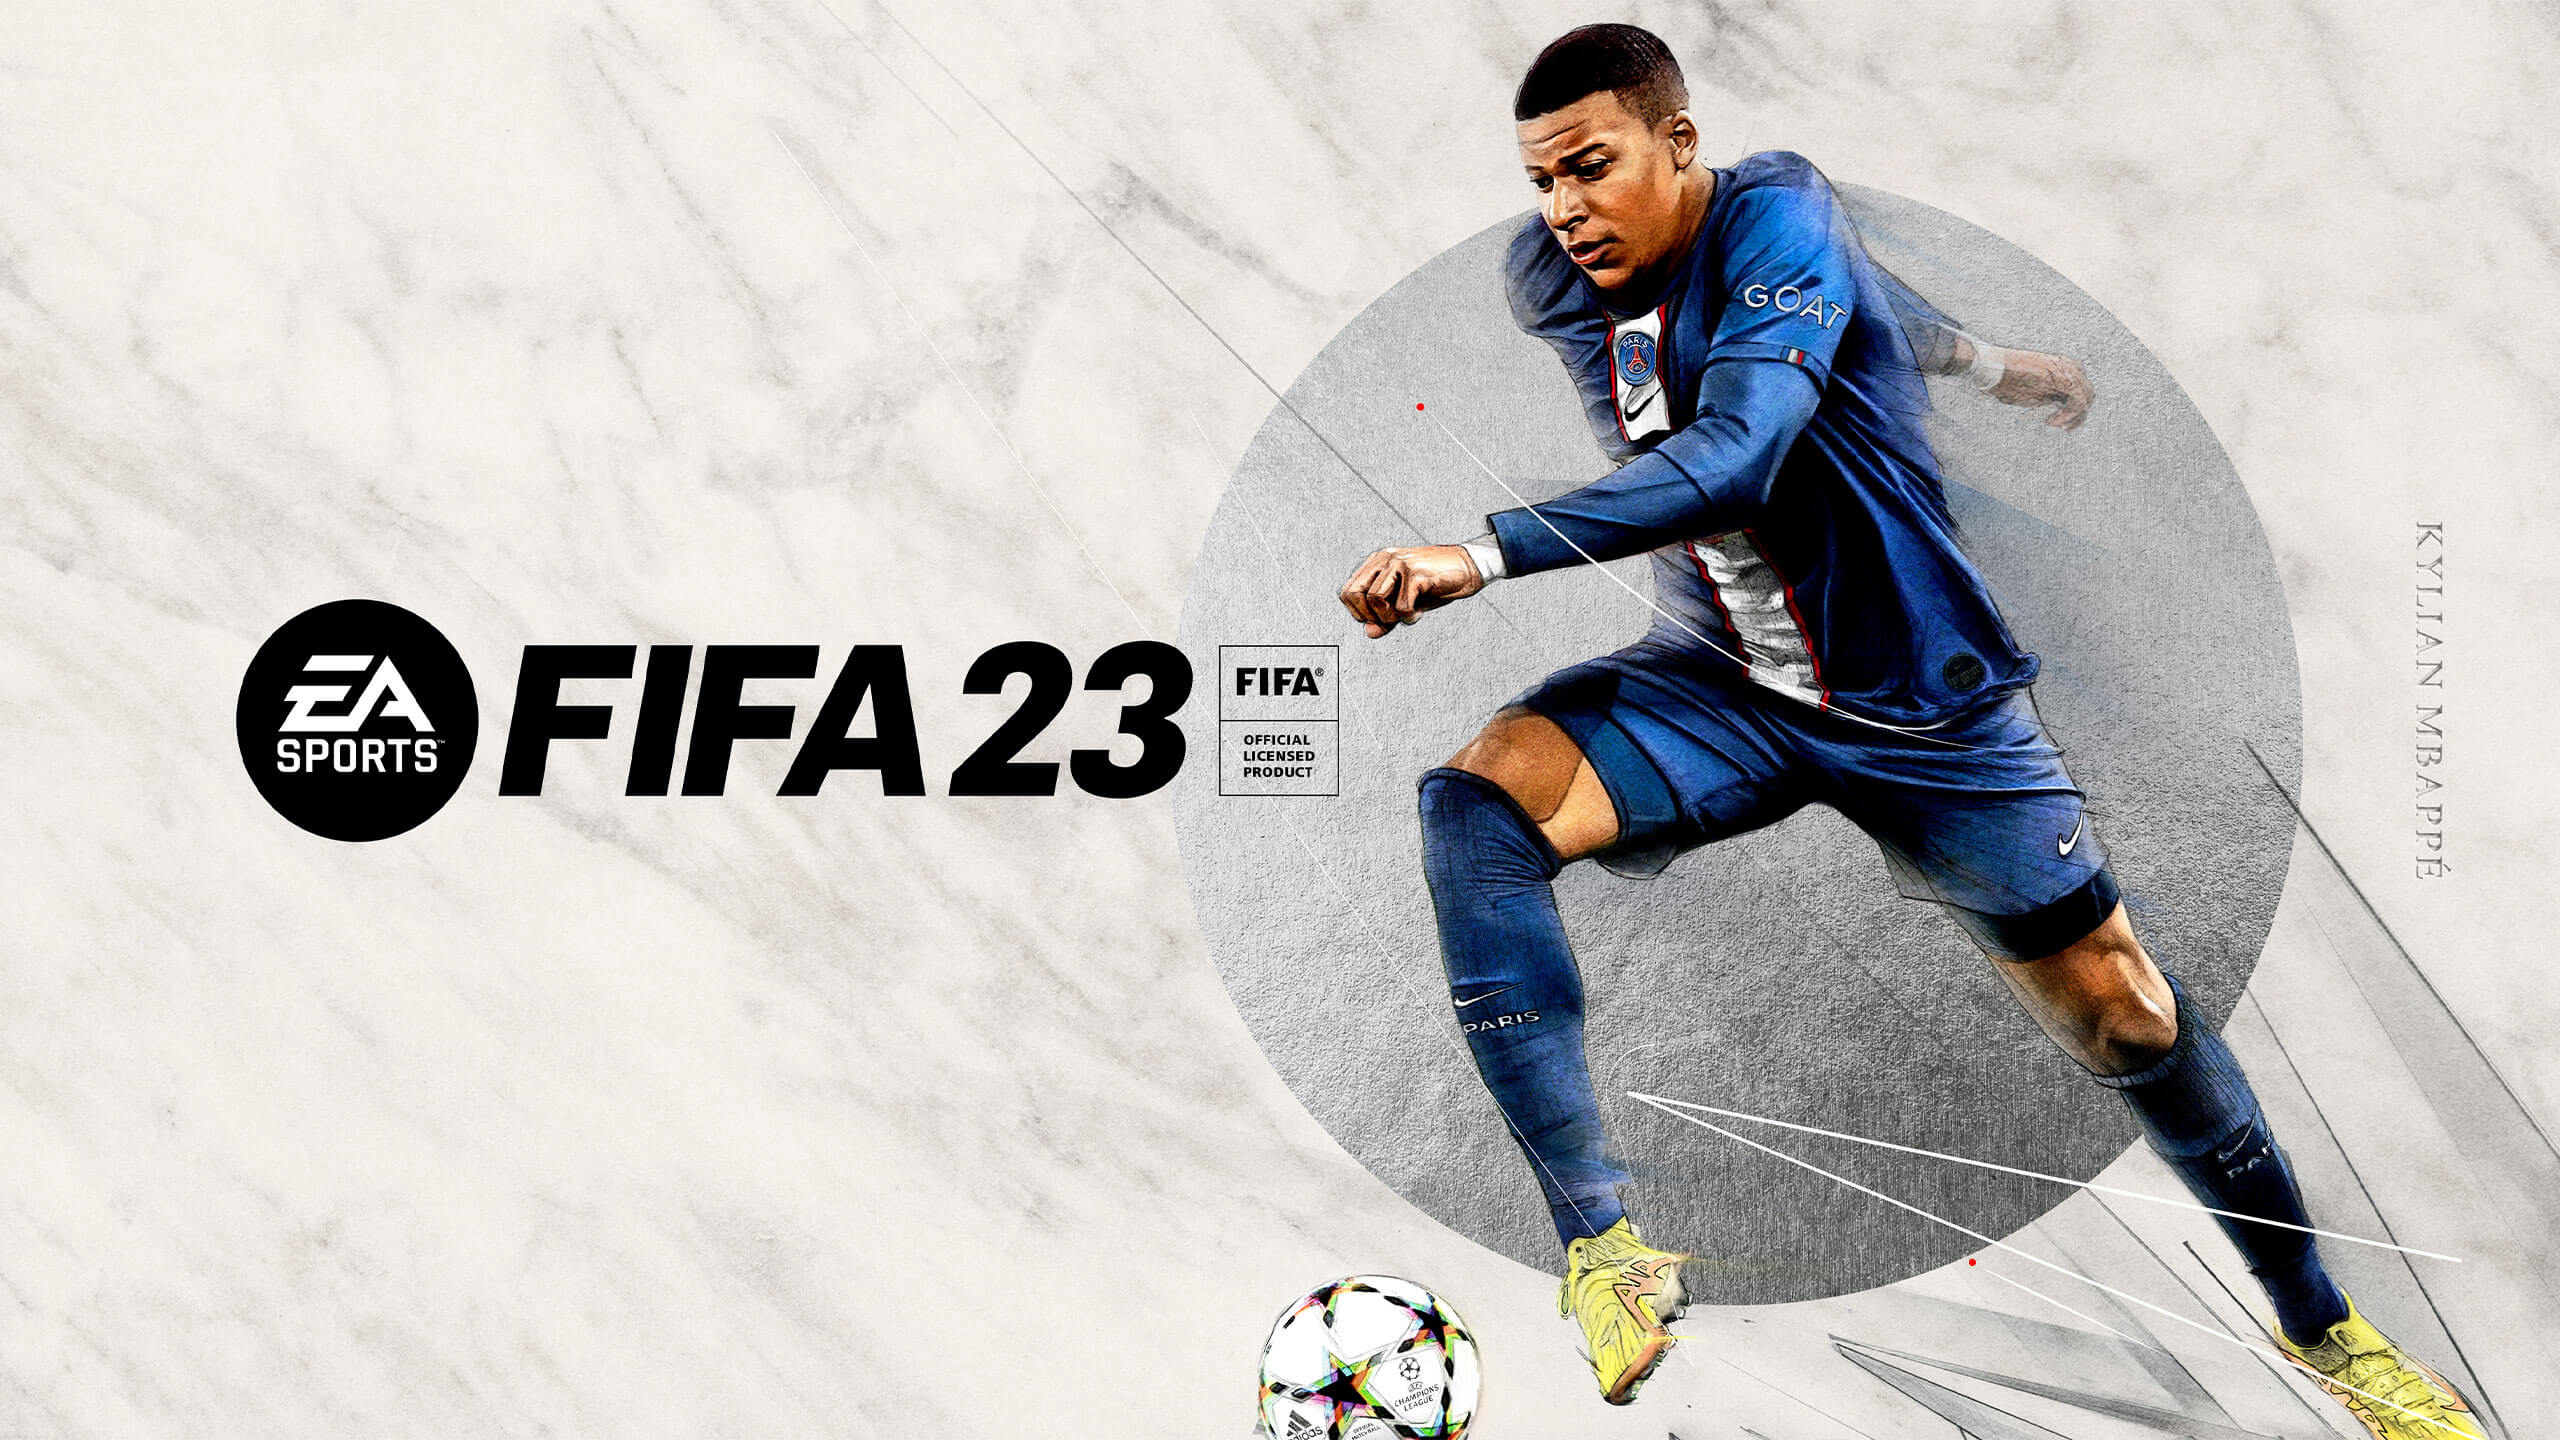 FIFA 22 Gameplay (PC UHD) [4K60FPS] 